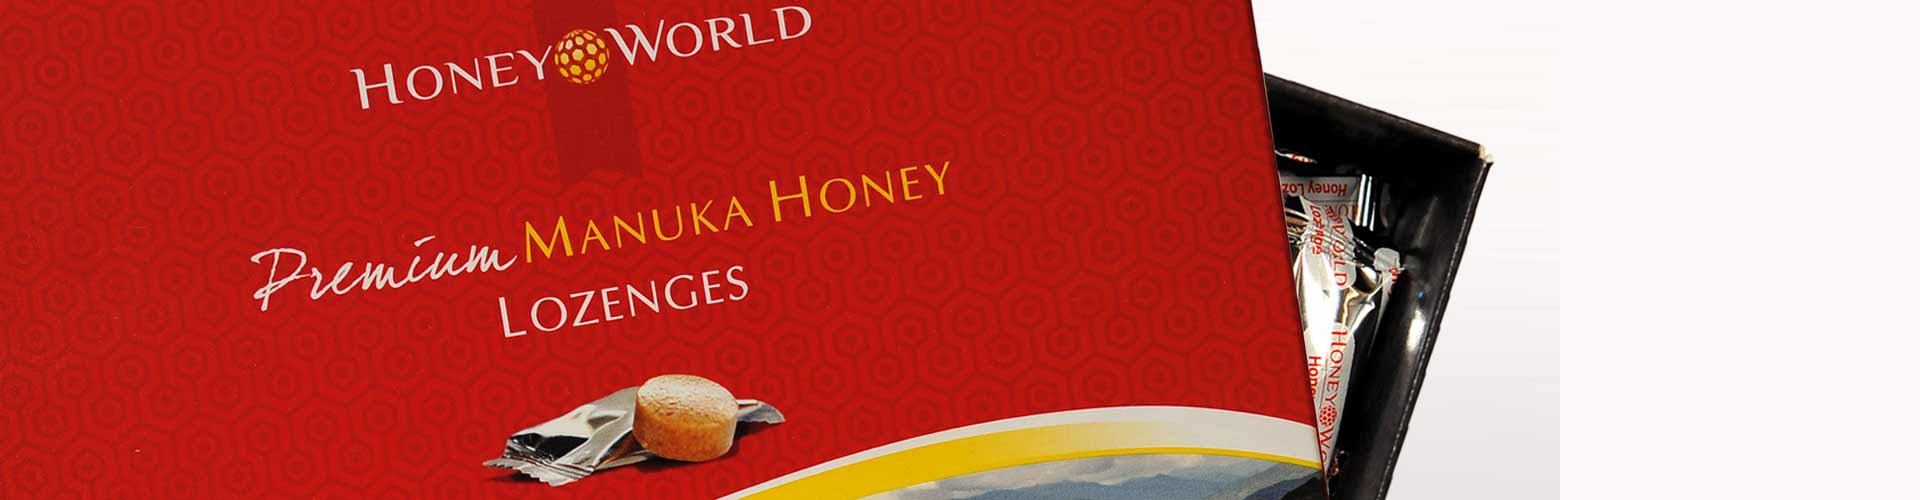 HoneyWorld Manuka Honey Gift Box